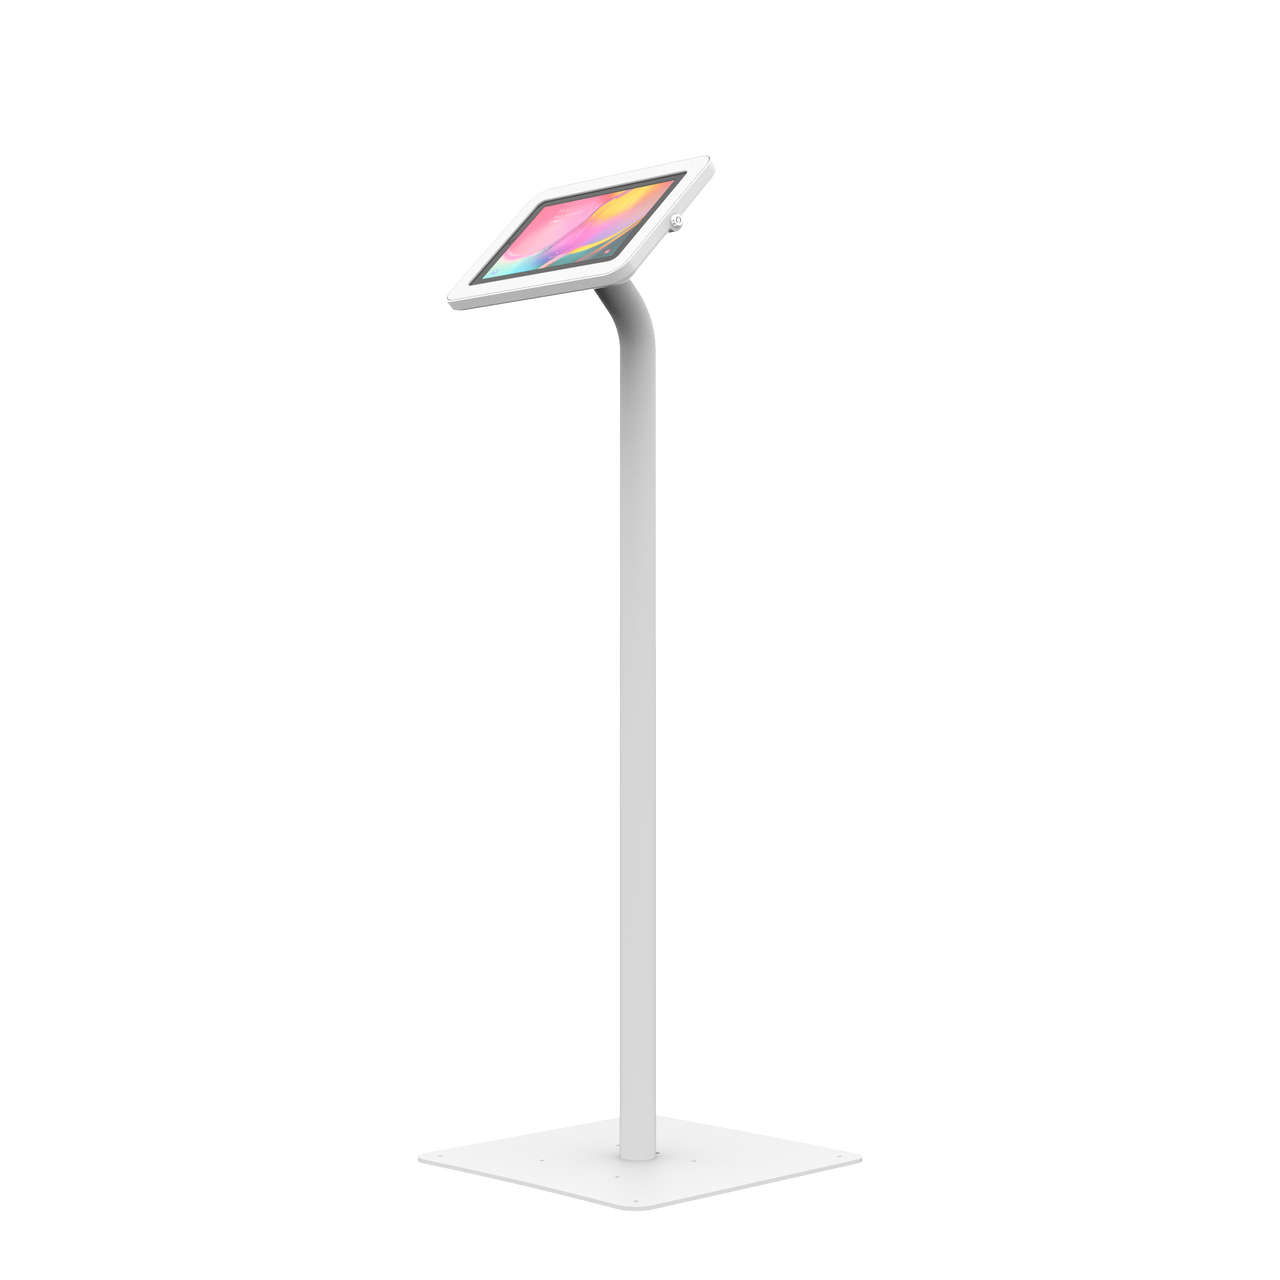 Elevate II Countertop Kiosk for Galaxy Tab A 10.1 (2019) (Black)